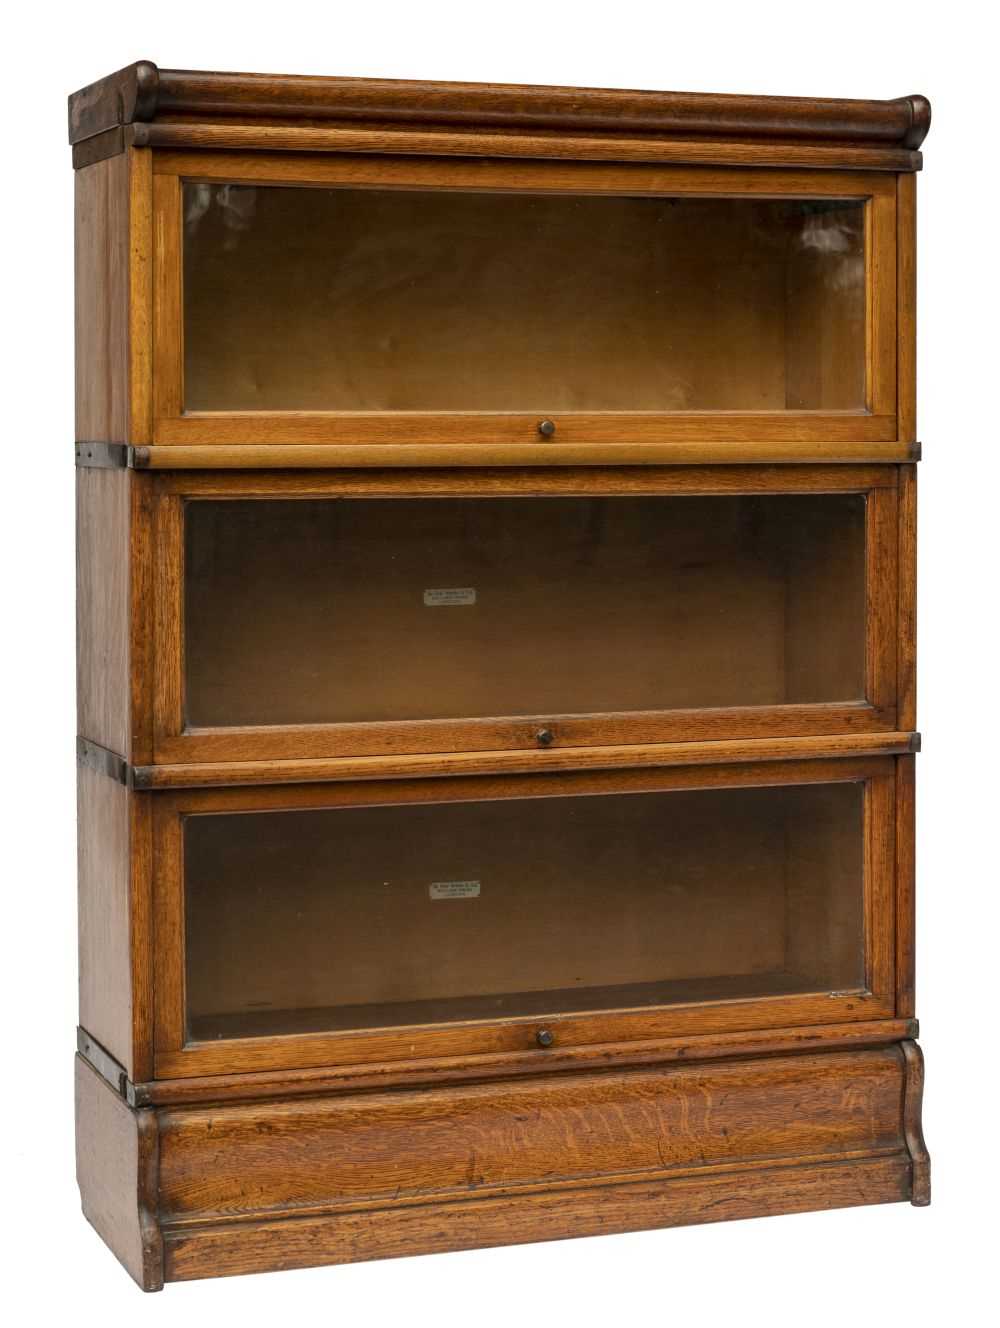 Lot 298 - Bookcase. A 1920s oak Globe Wernicke bookcase